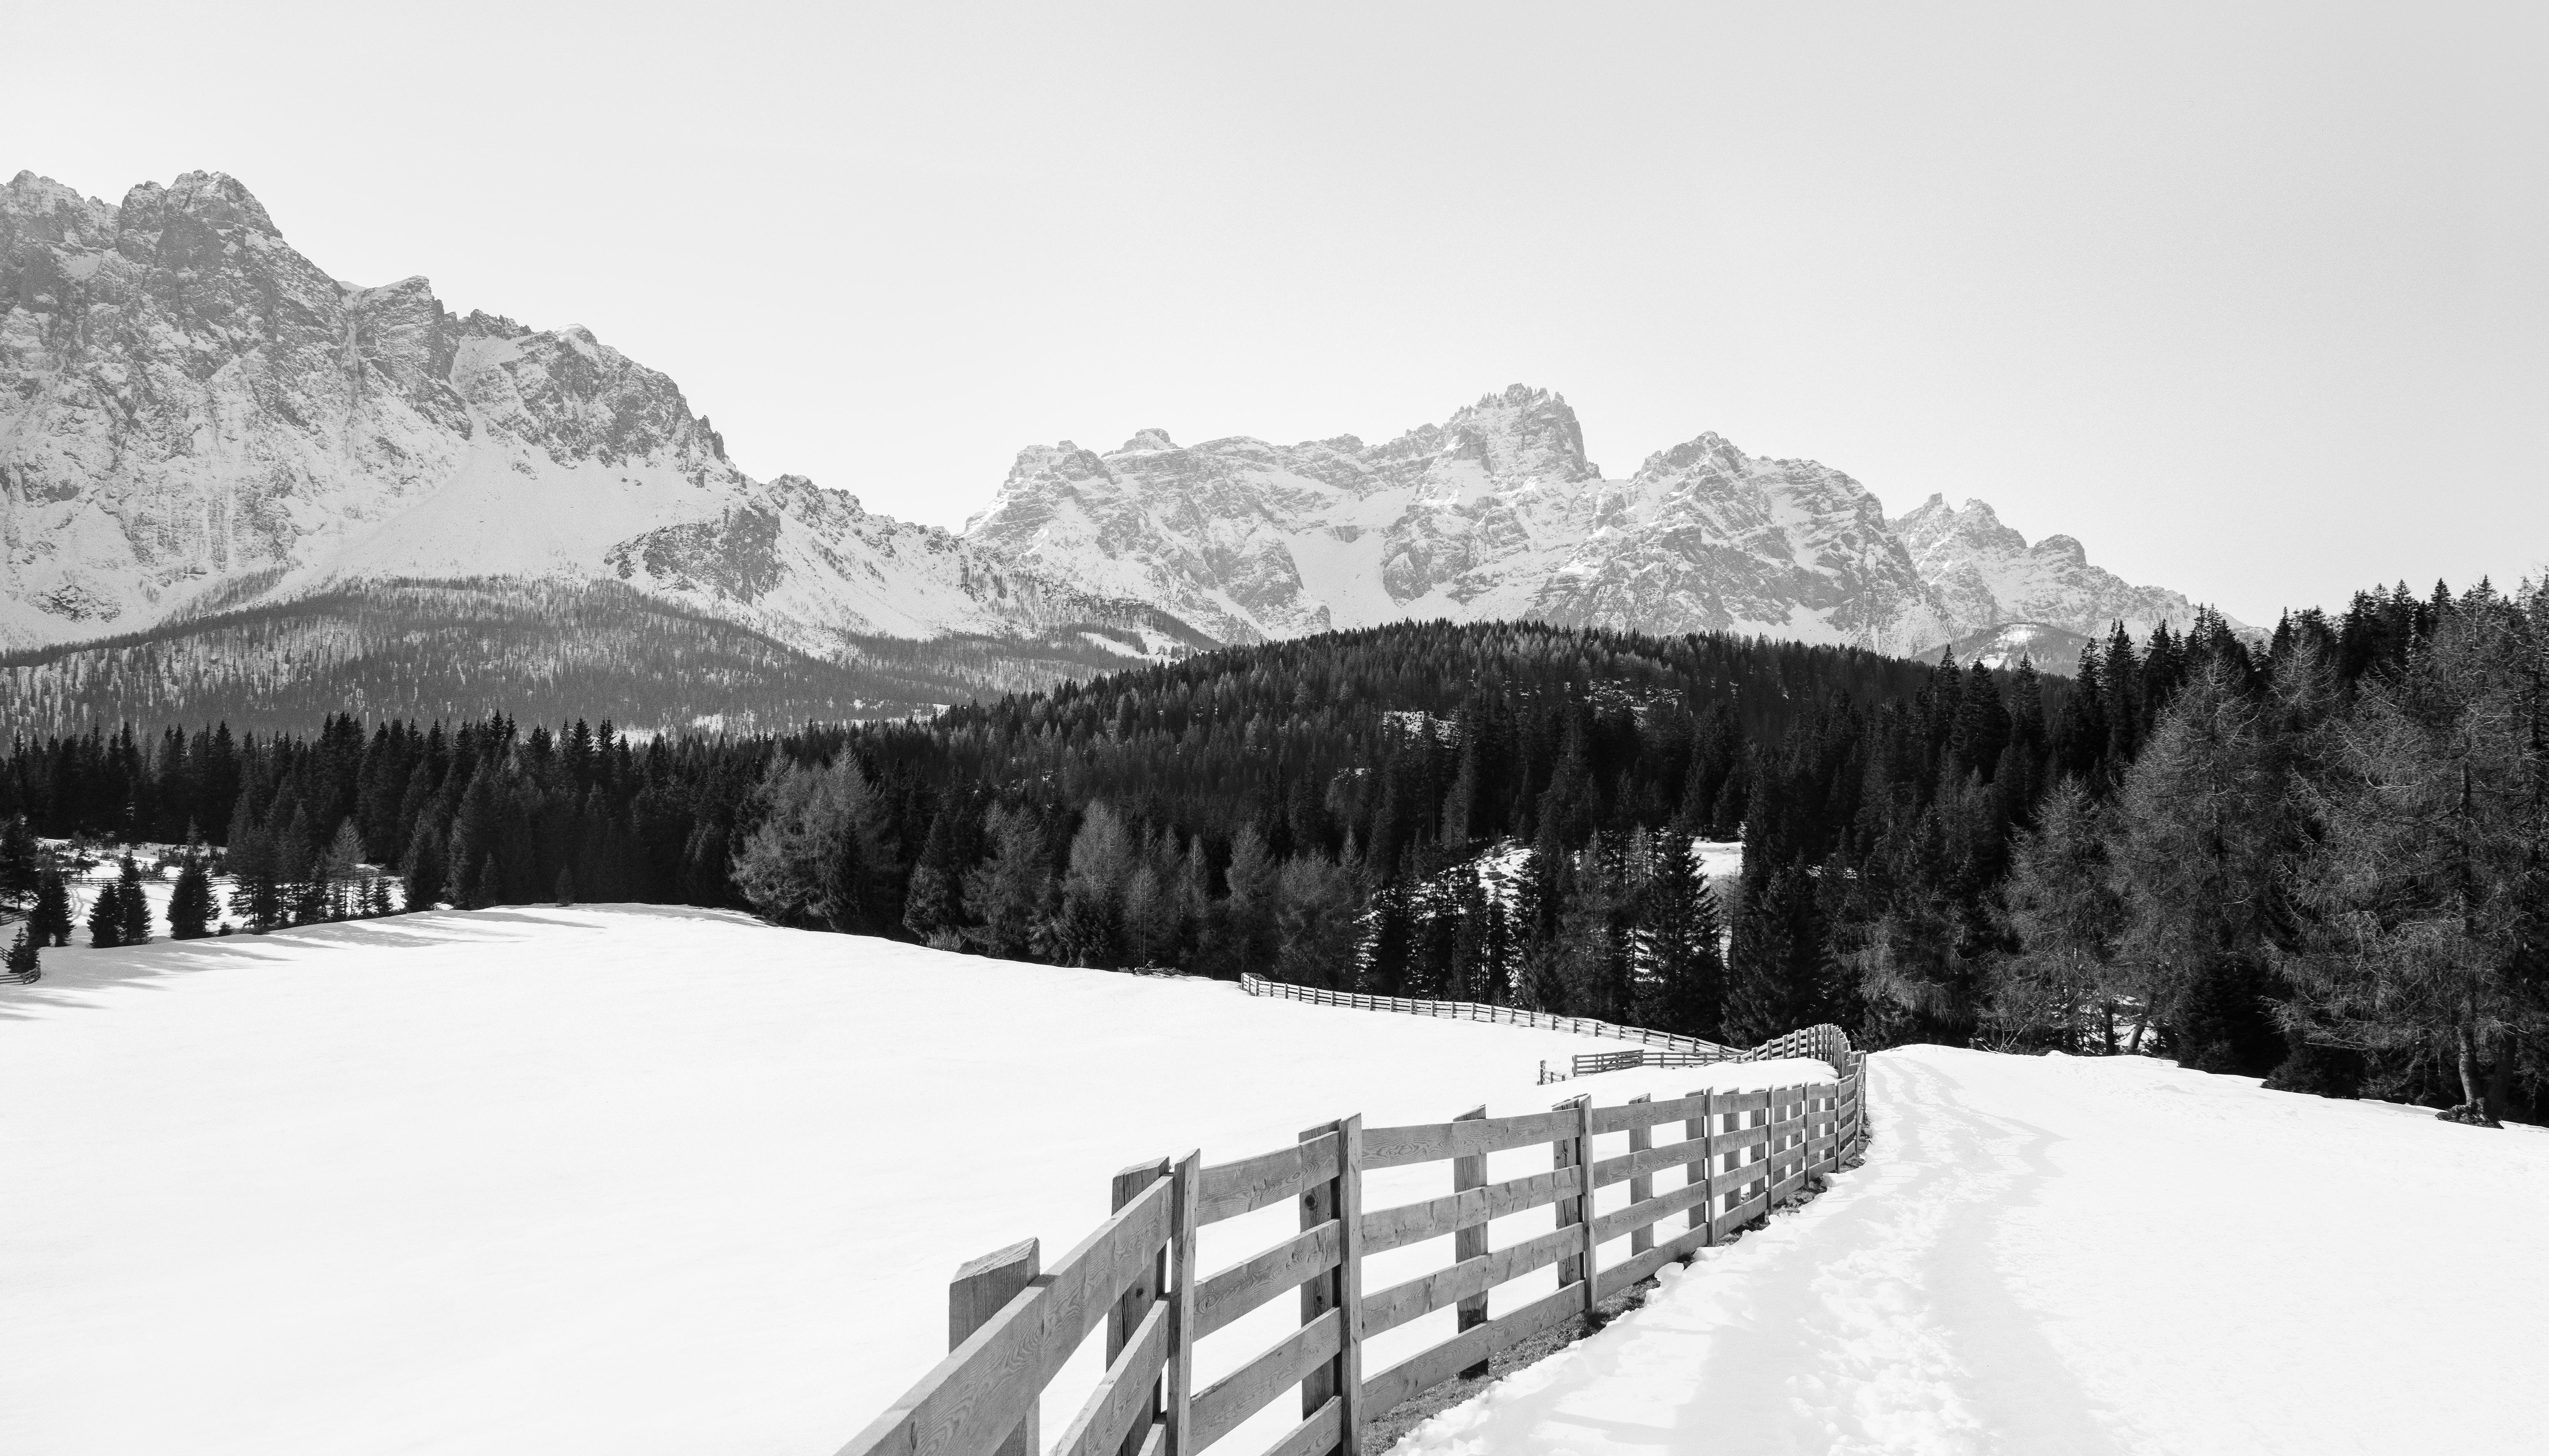 Ugne Pouwell Black and White Photograph - Dolomites No.2 - Analogue Black and White Mountain Photography, Ltd. 10